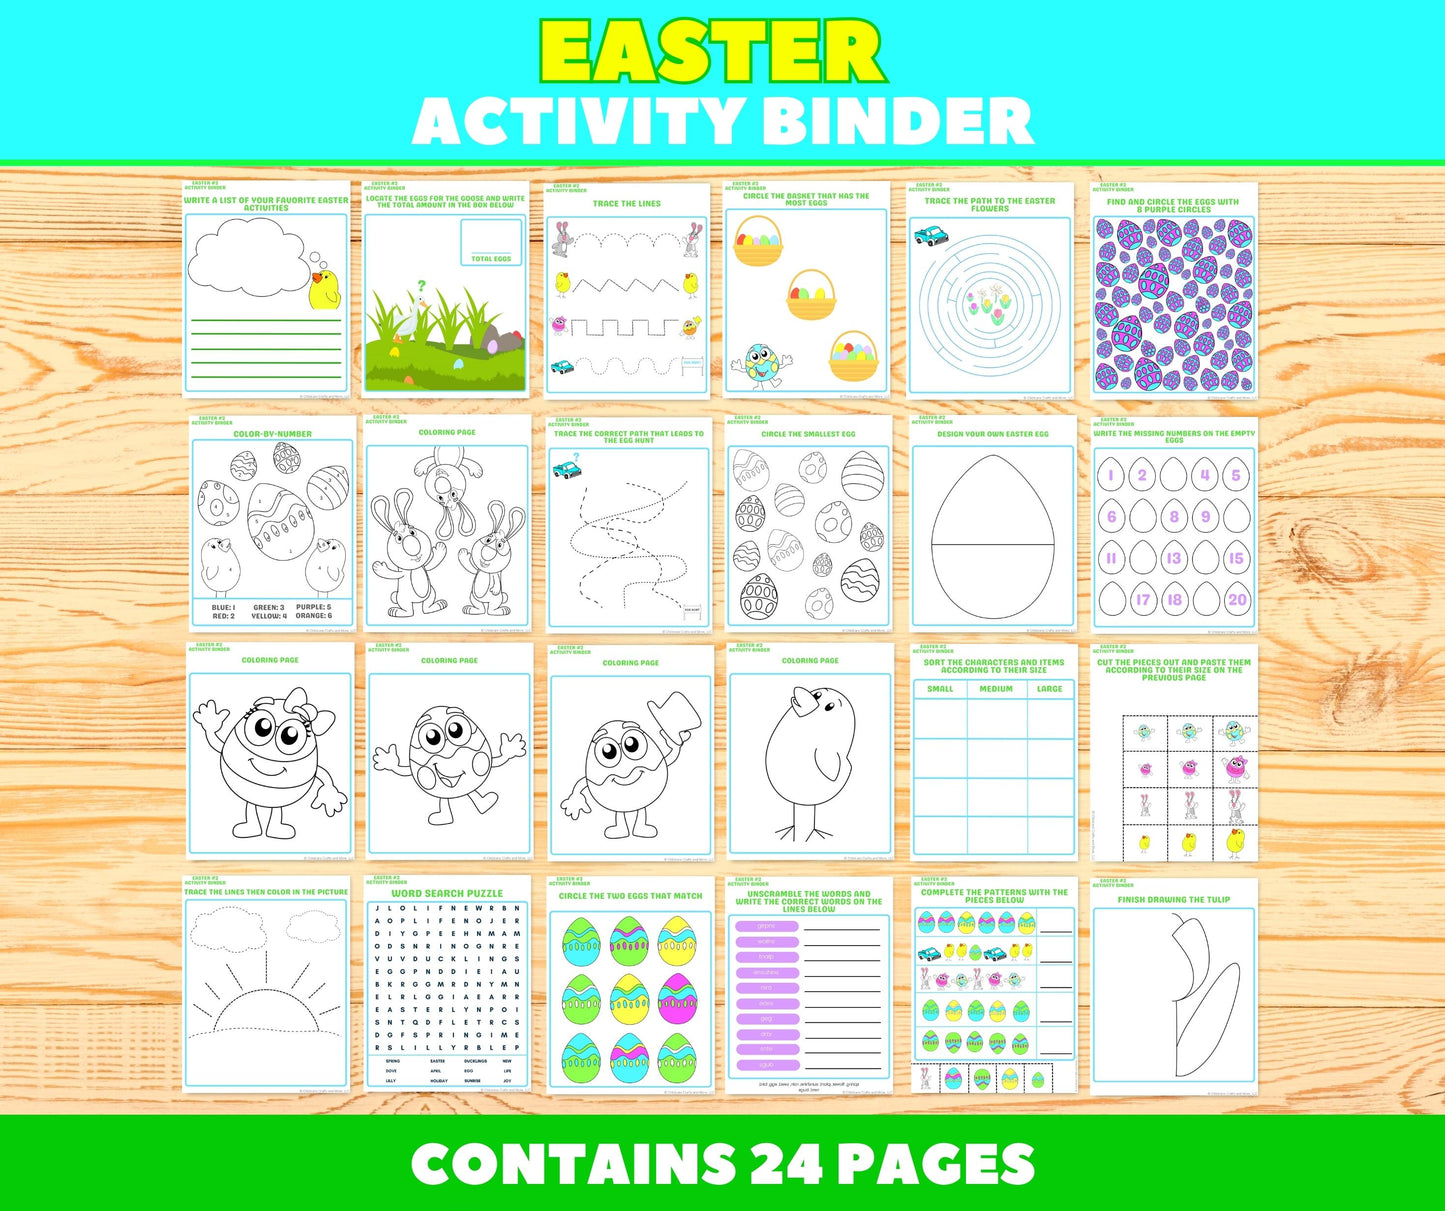 Easter #2 Activity Binder - Download